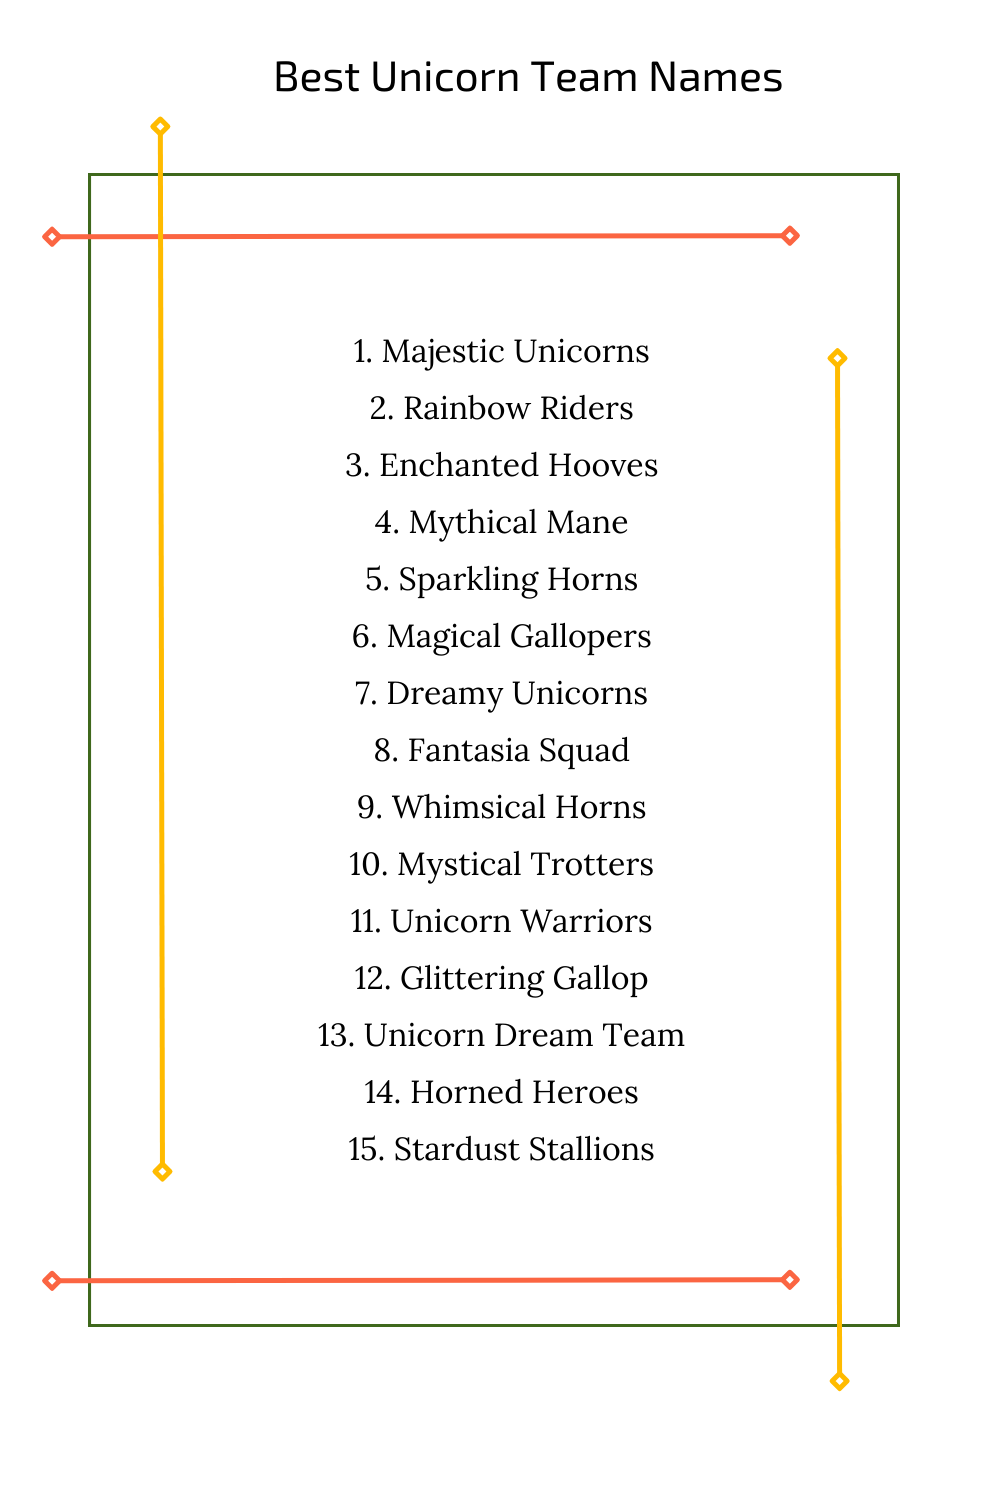 Best Unicorn Team Names